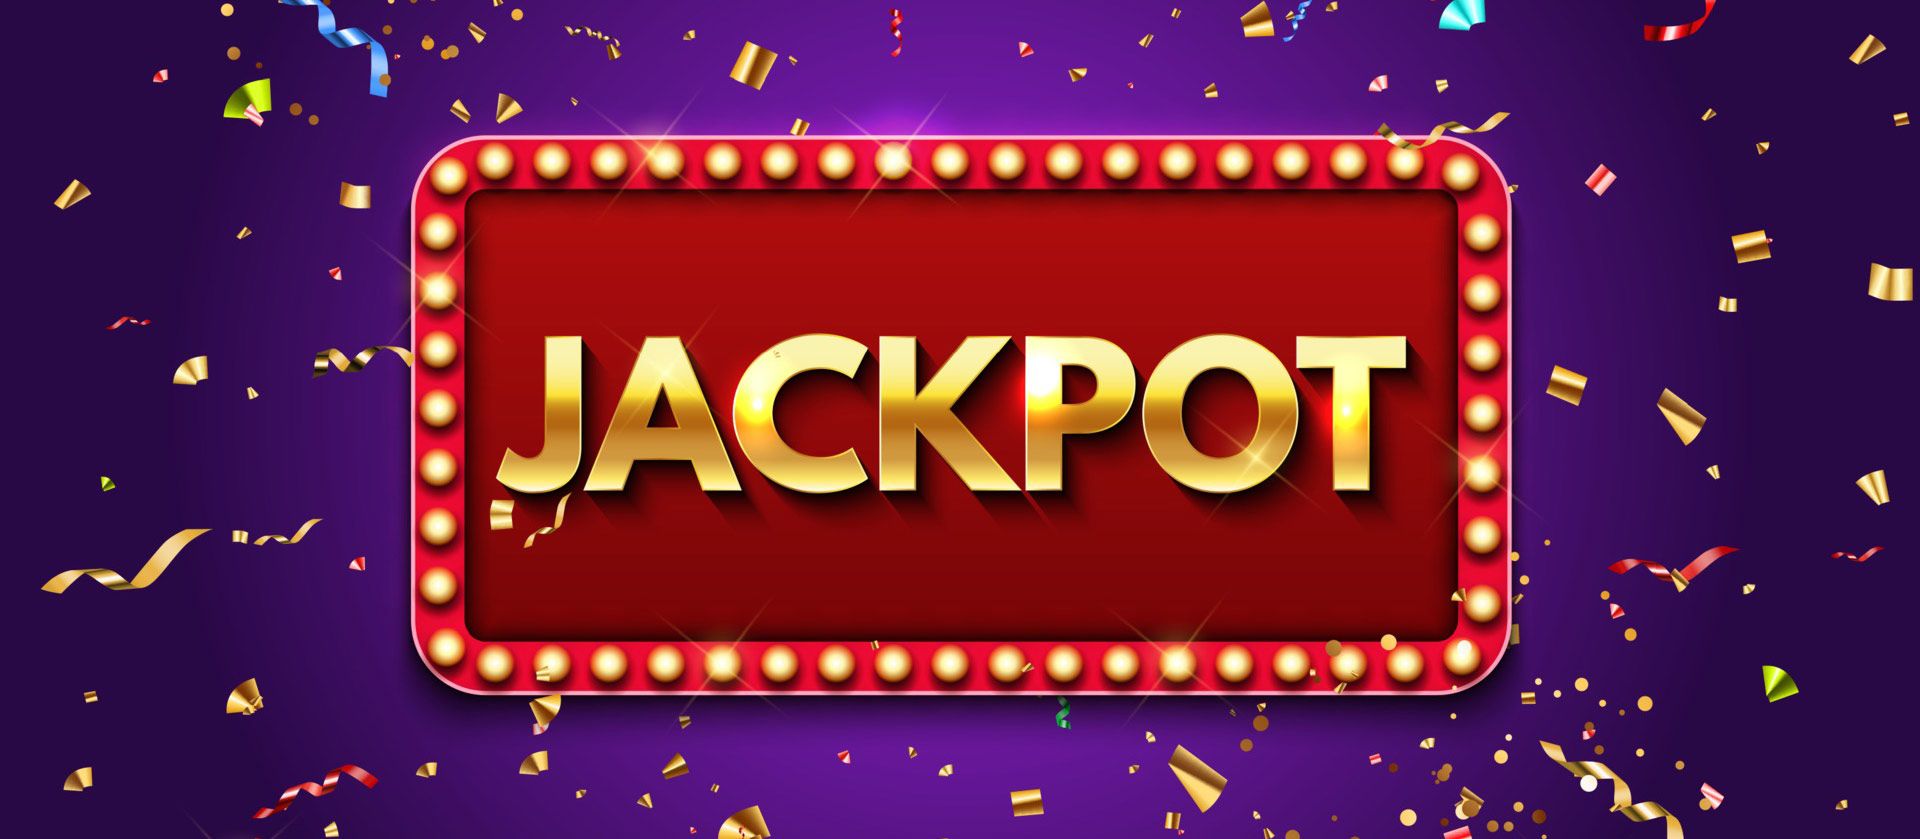 Jackpot bonuses in Australian casino.